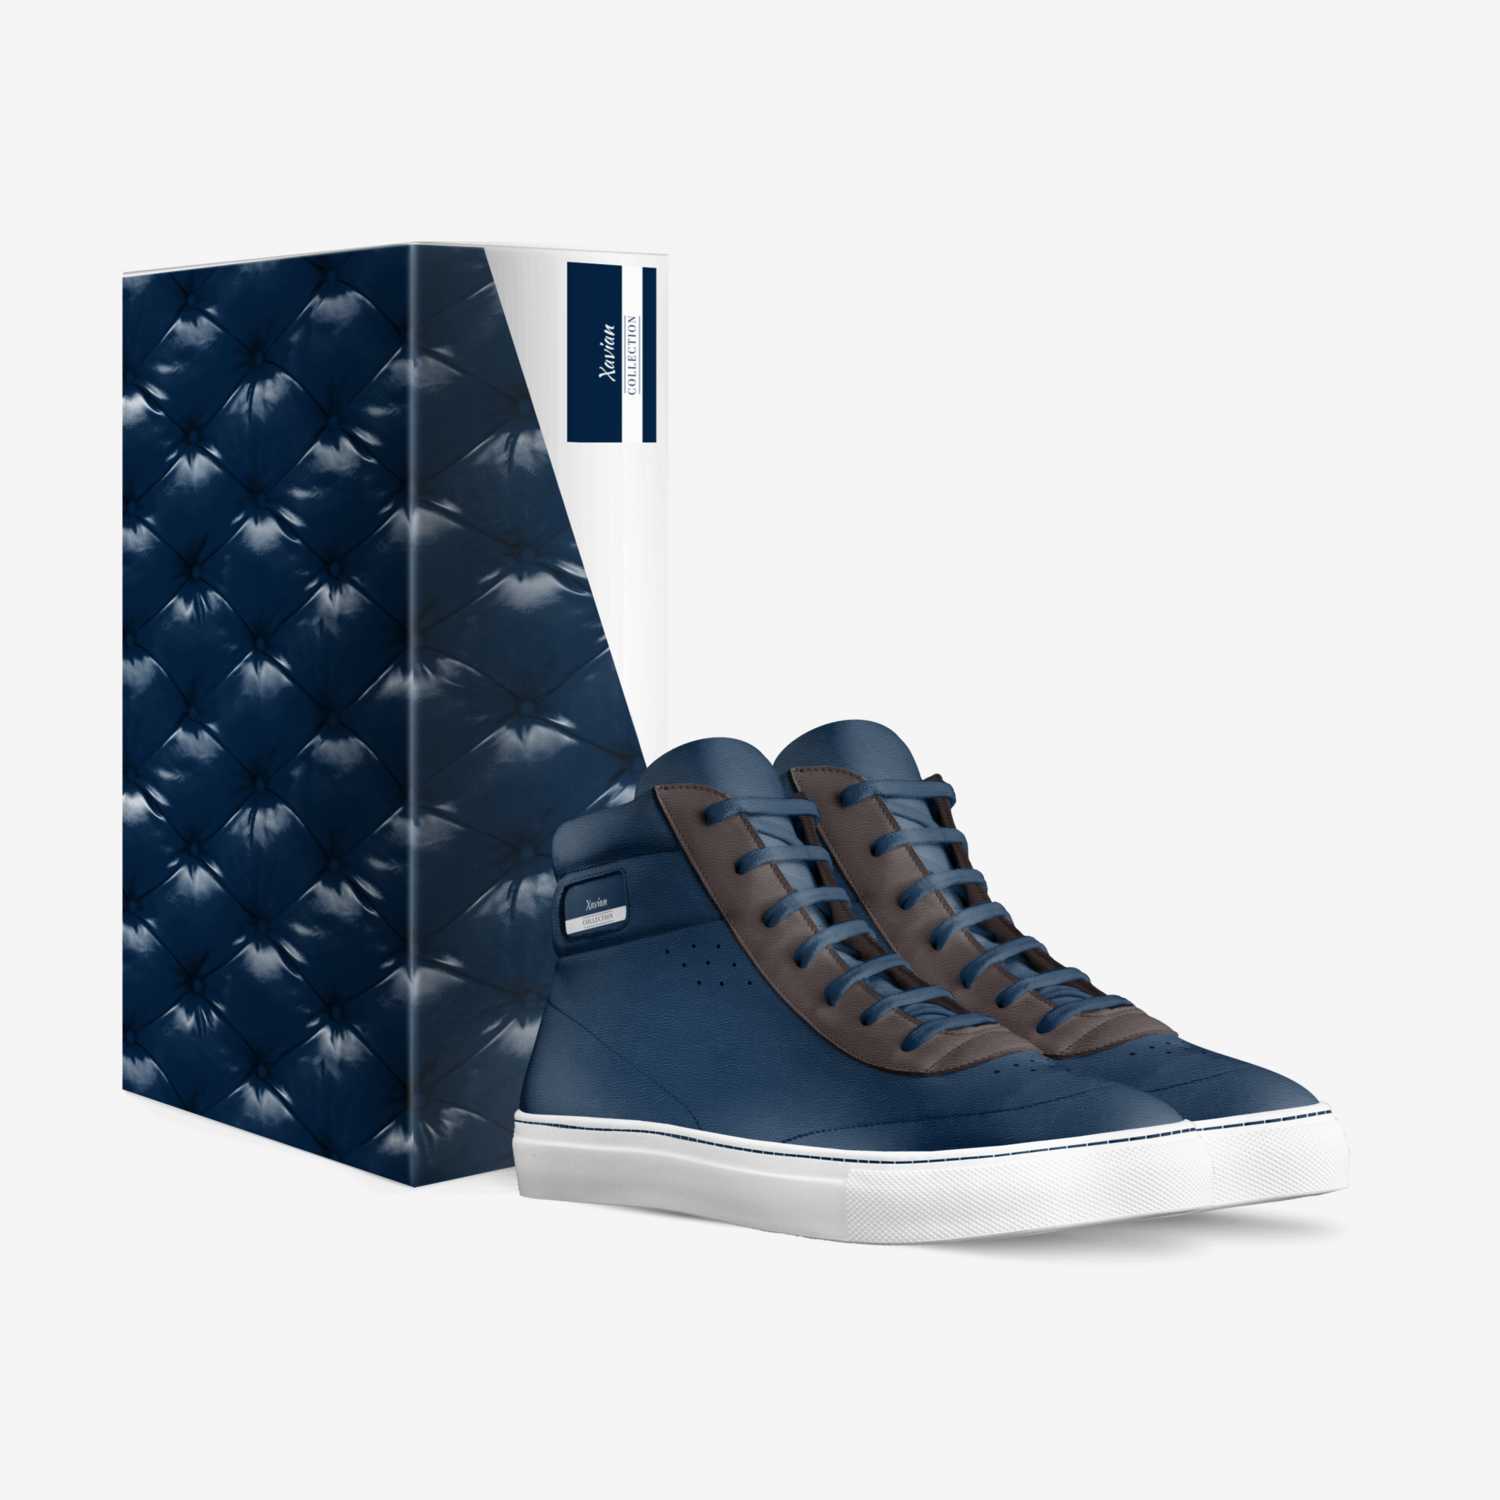 Xavian custom made in Italy shoes by Xavian Gungan | Box view